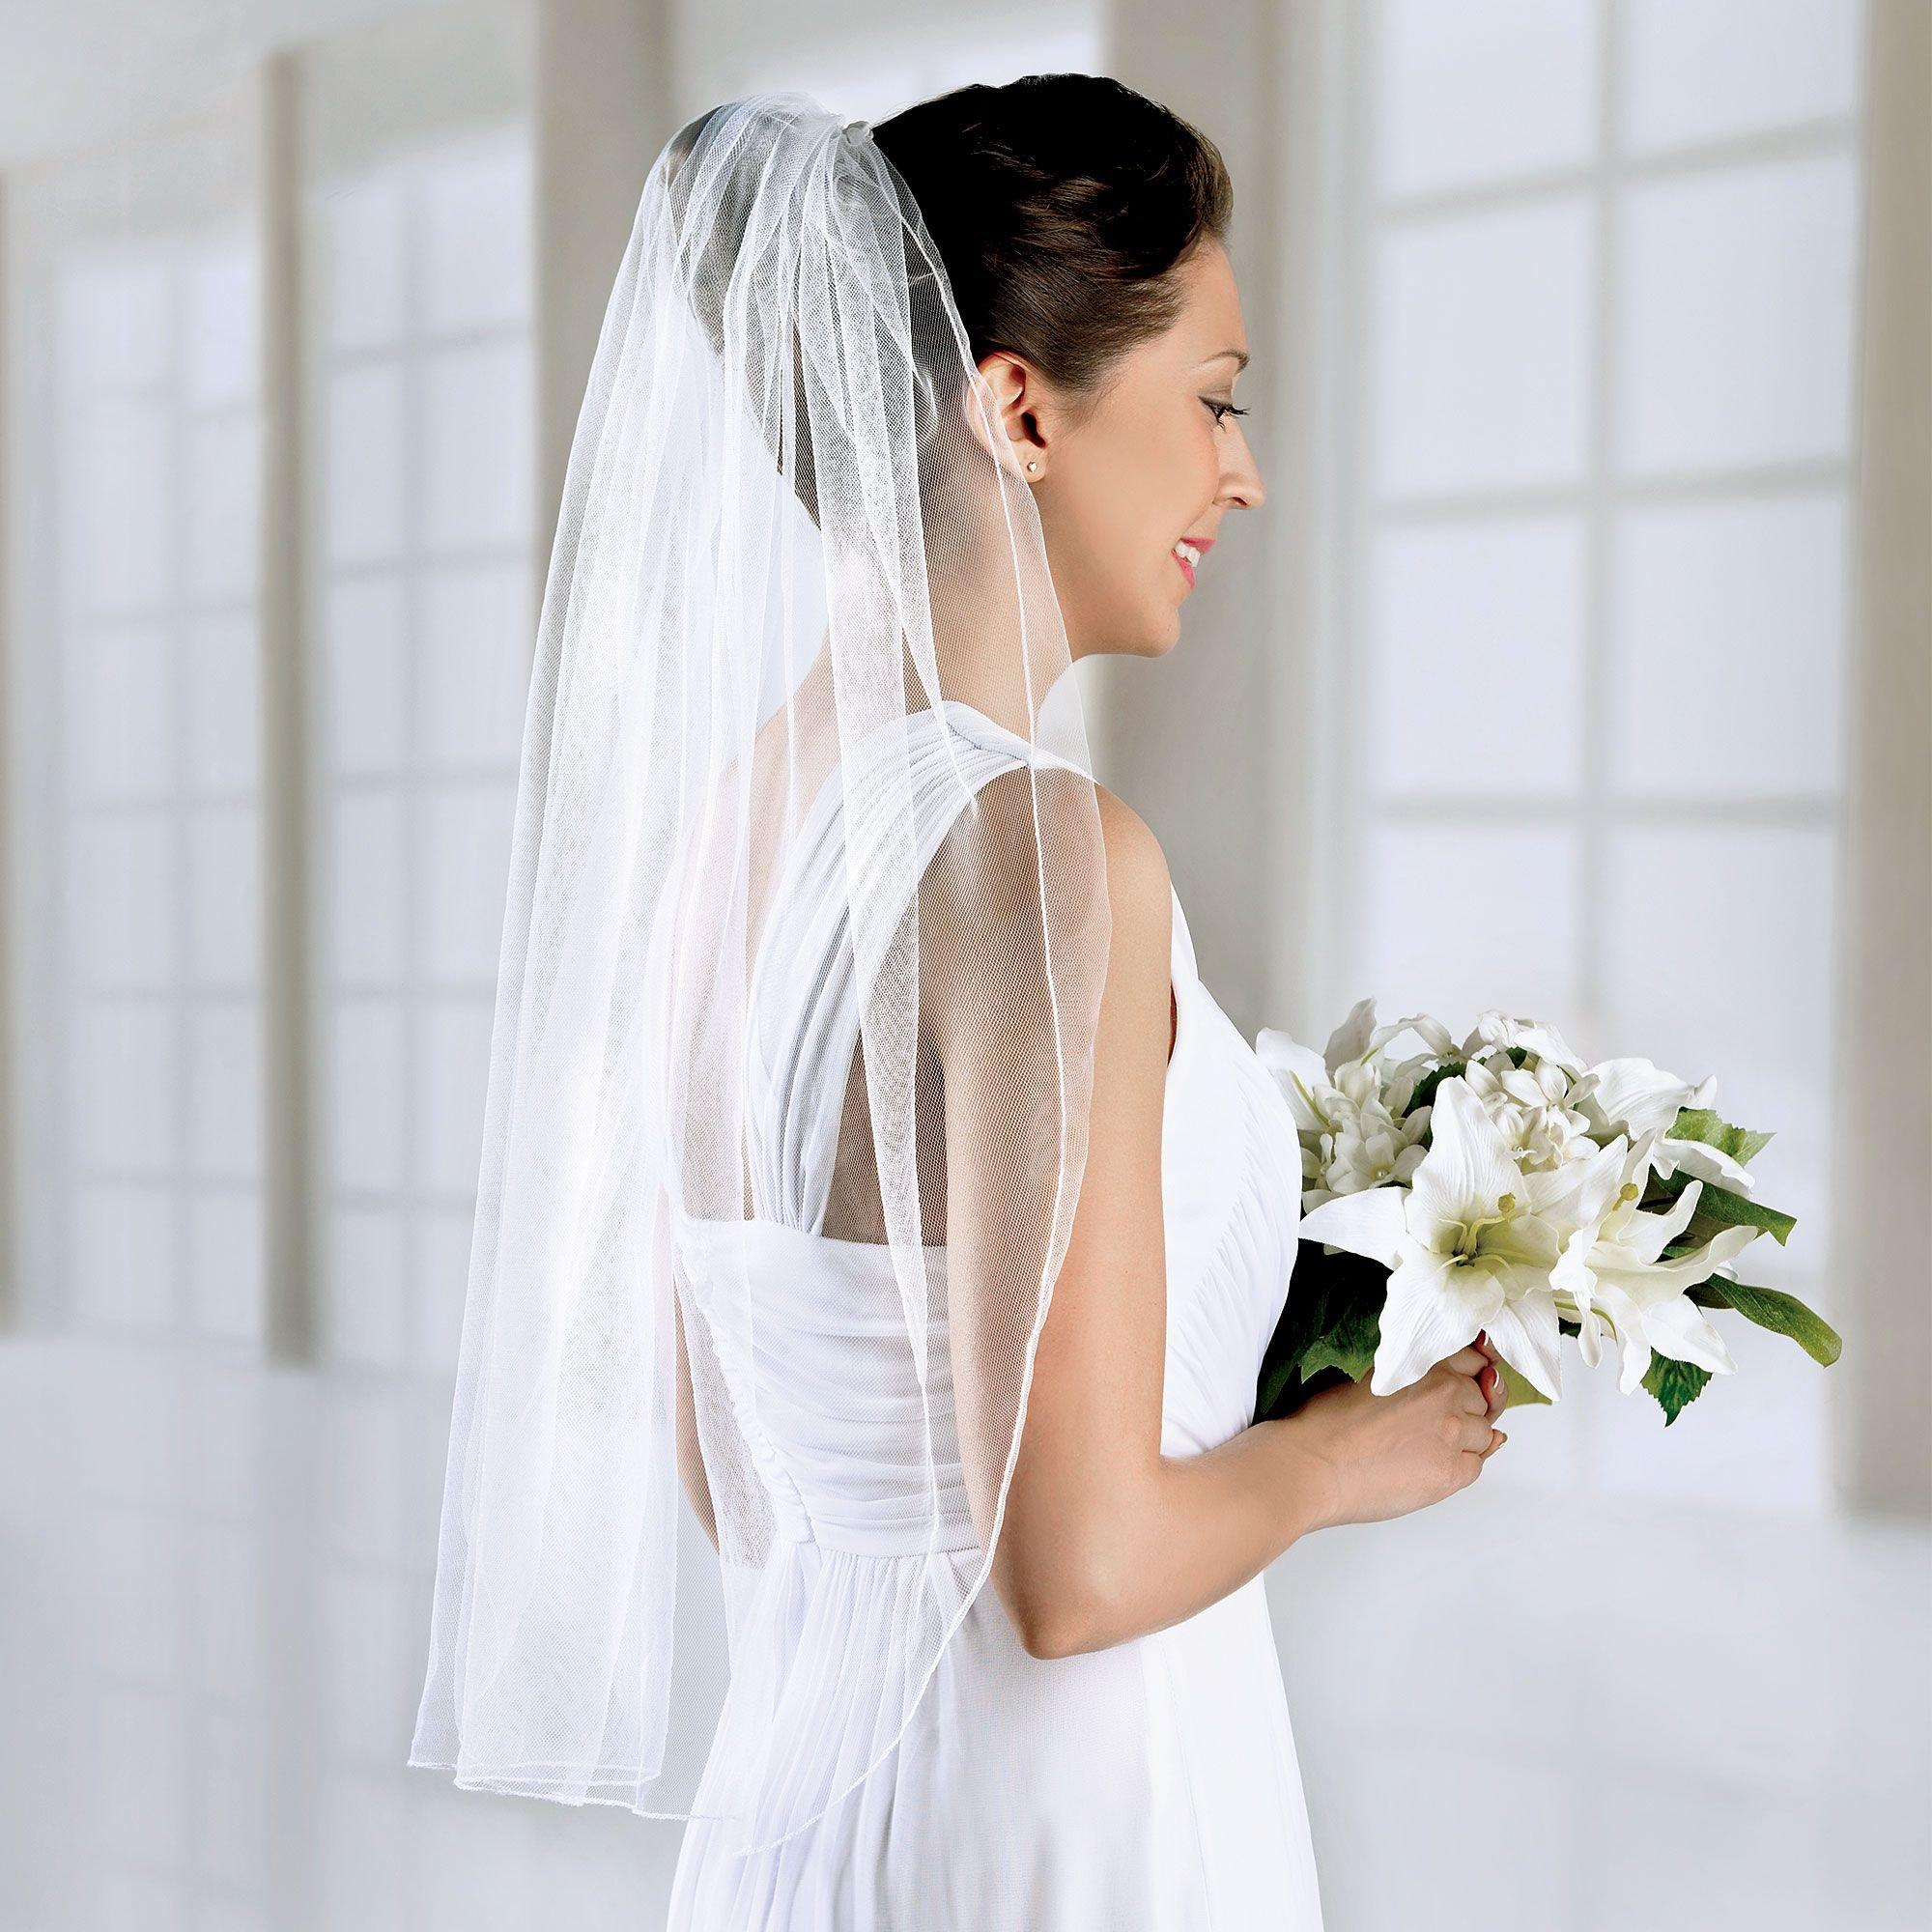 AccessoriesByHayas Veil Weights, Cream White Floral Bridal, Elegant, Wedding, Wedding Veil, Wedding Party, Bride, Bling, Wedding Veil Weights, Veil Control